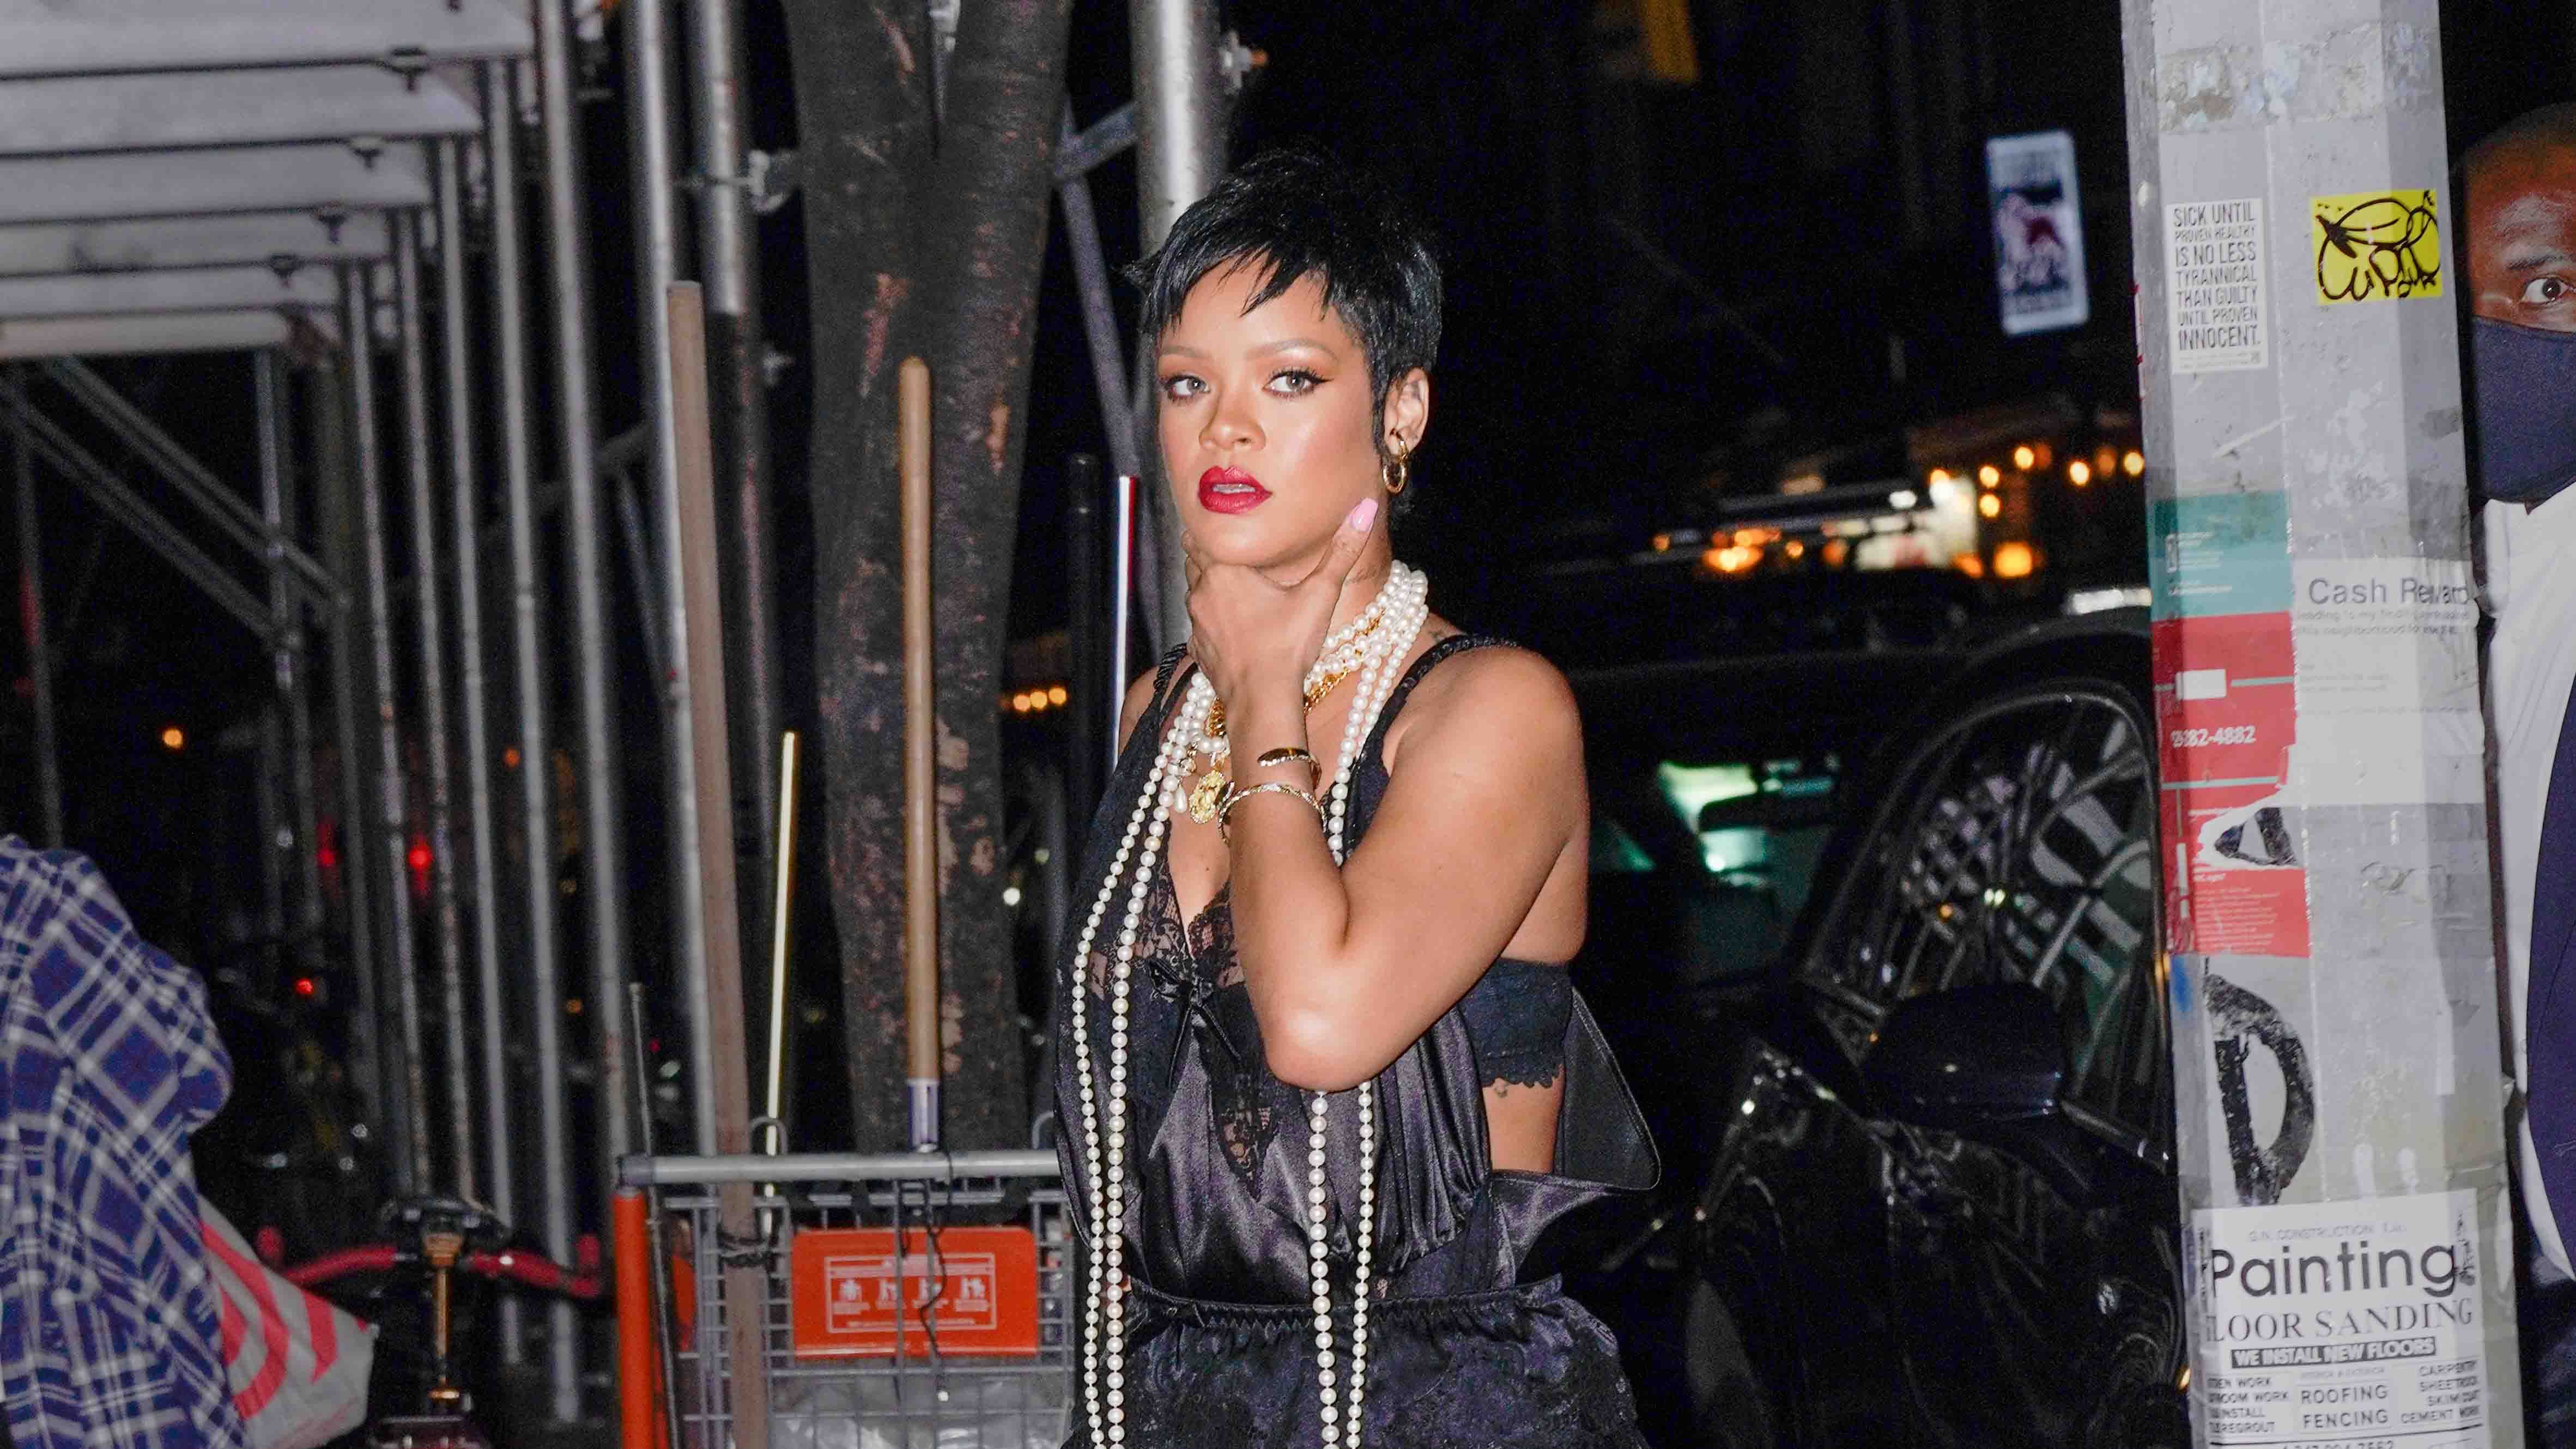 Rihanna New York City April 4, 2016 – Star Style